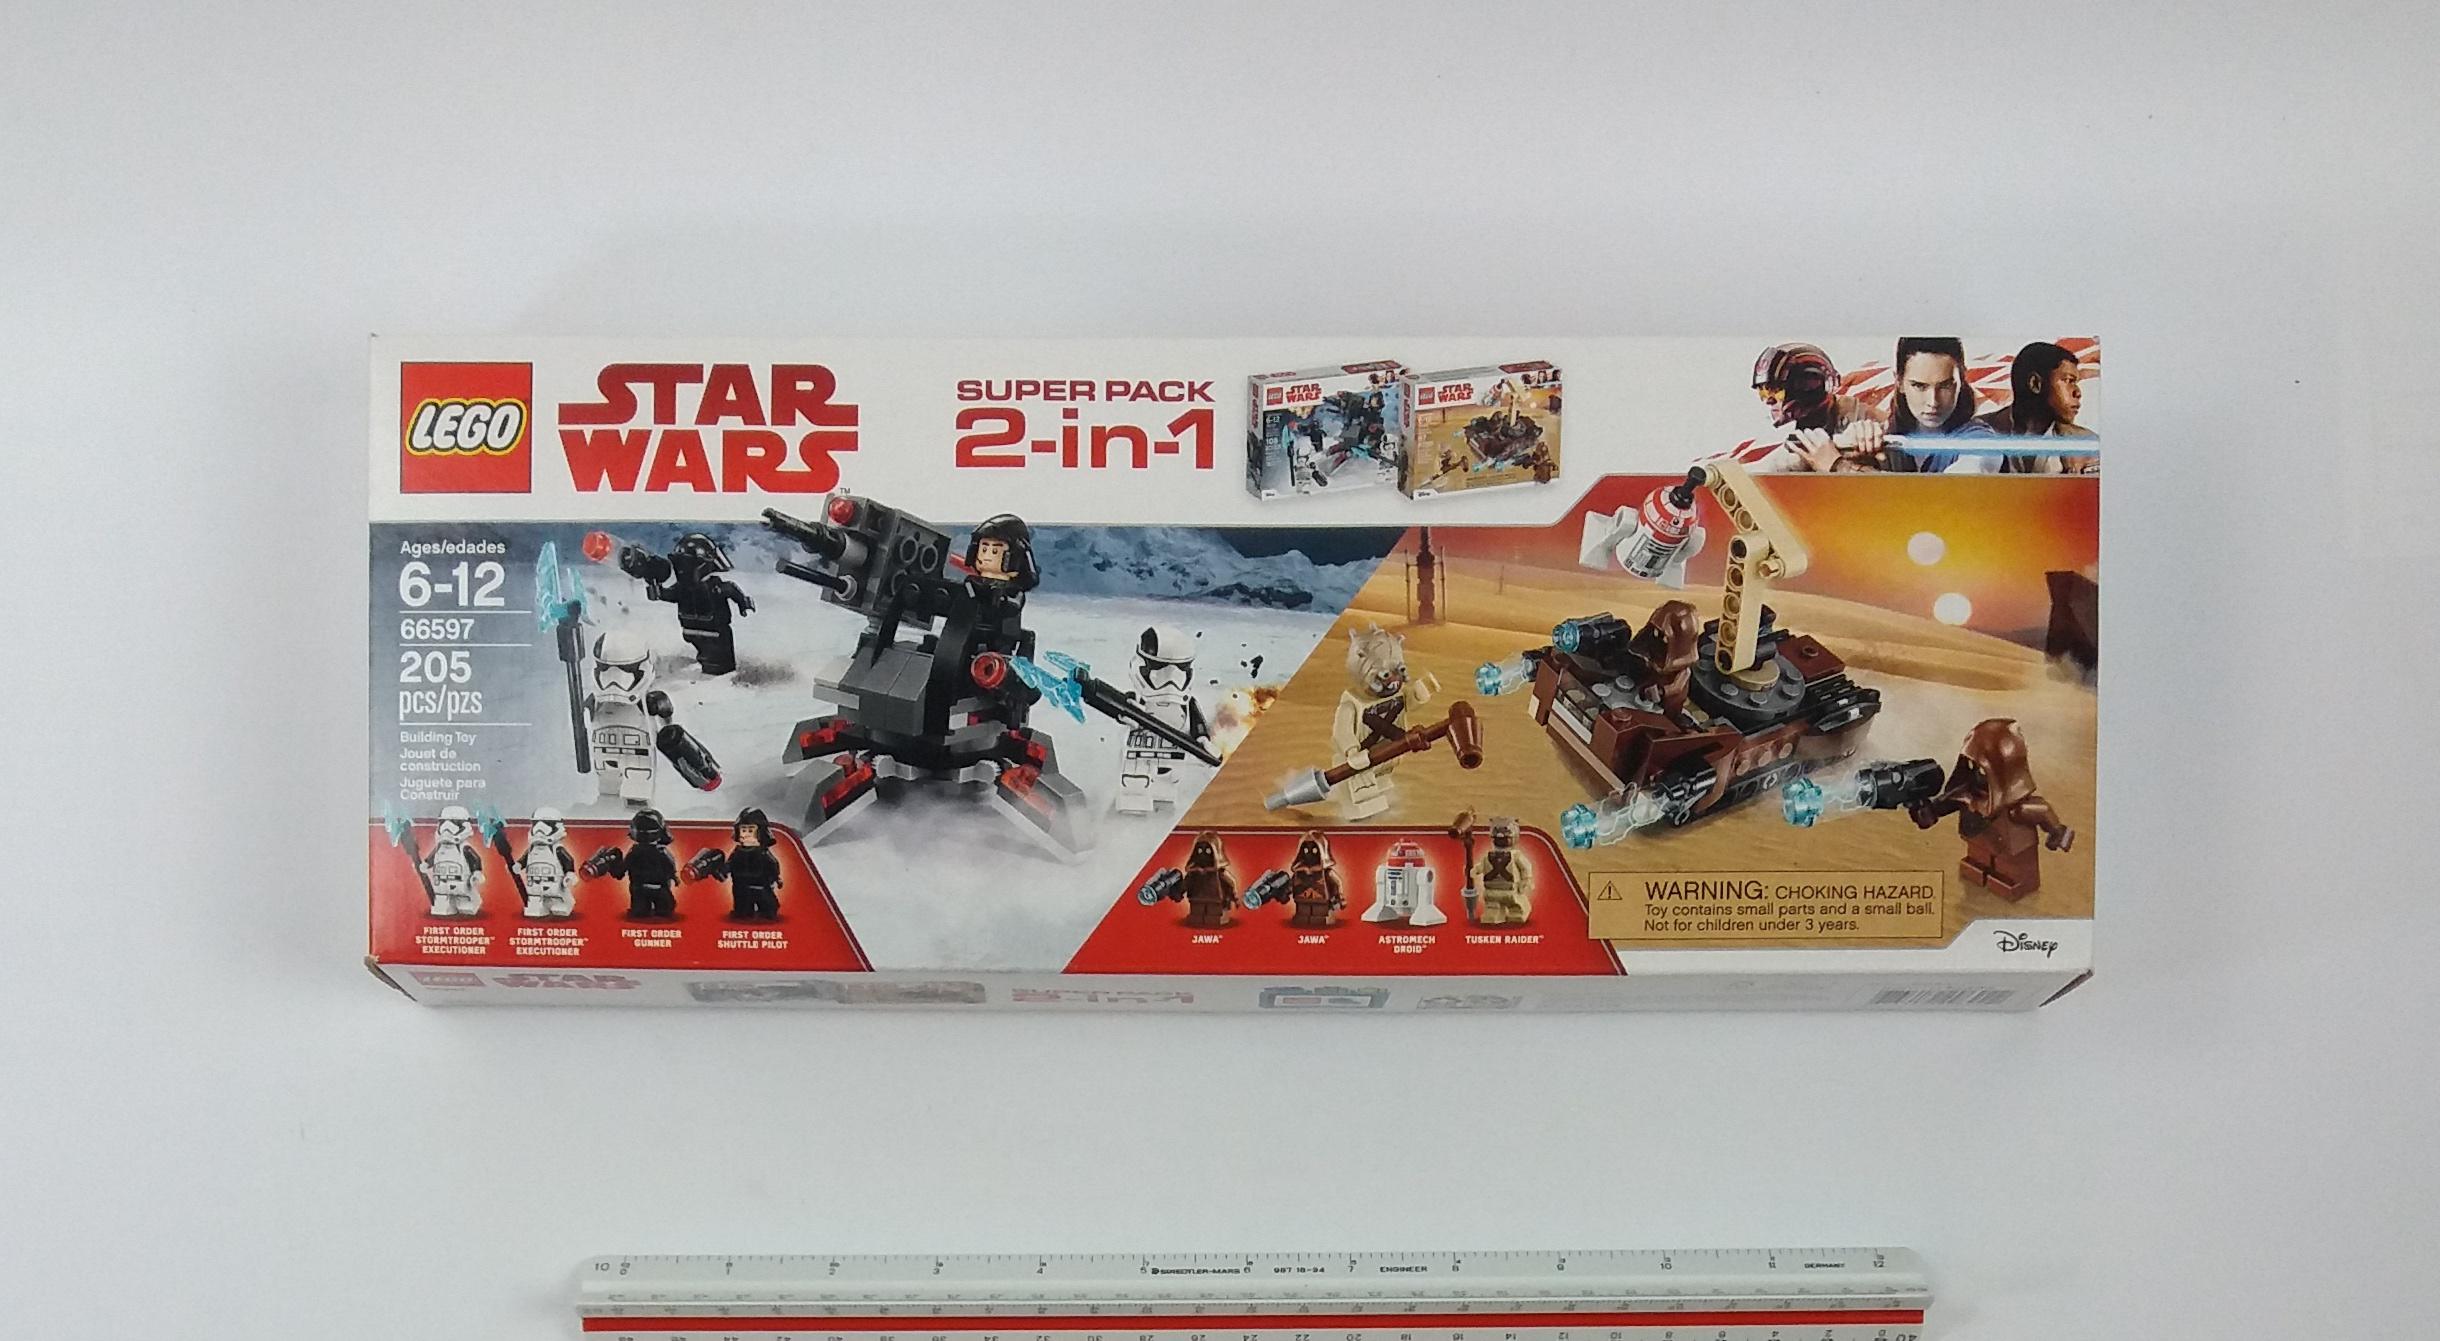 Star Wars Lego 66597 Super Pack 2  In 1 205 Piece Building Block Set